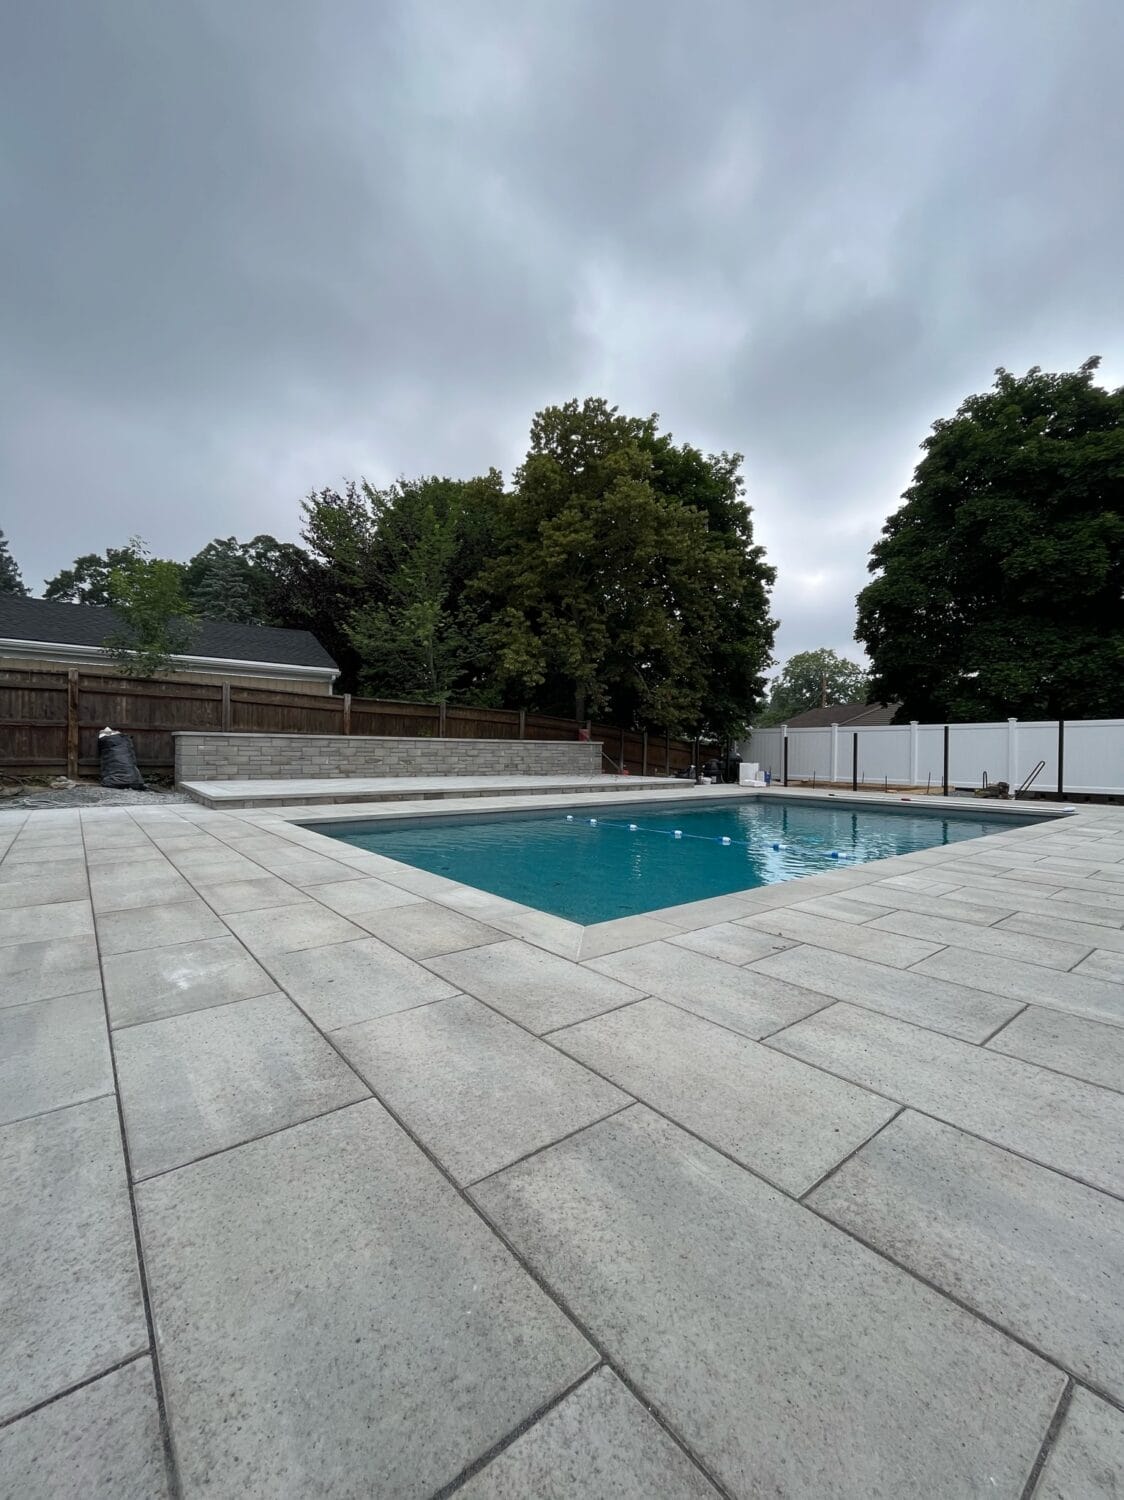 New concrete slabs around a pool